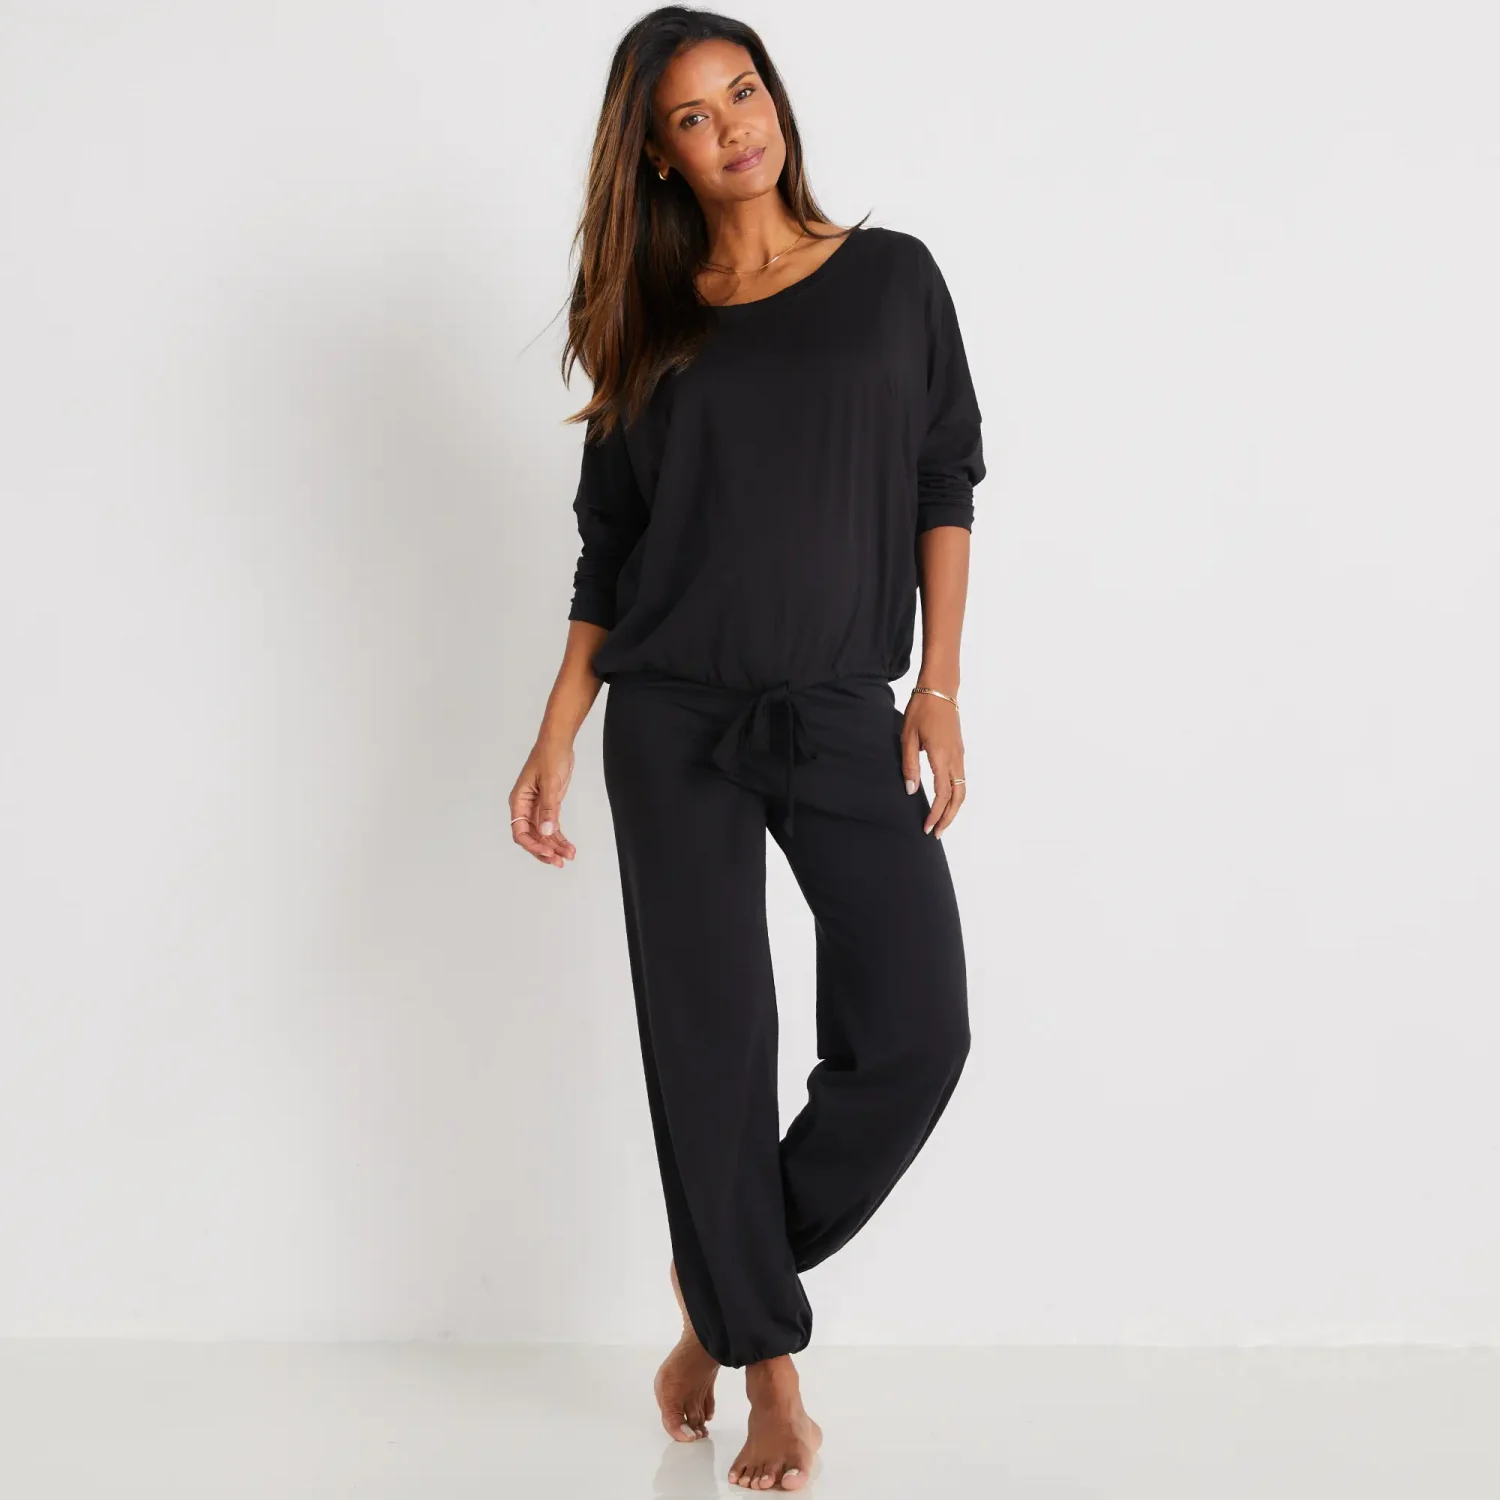 Eberjey brand contemporary and stylish maternity friendly loungewear cropped black soft pants